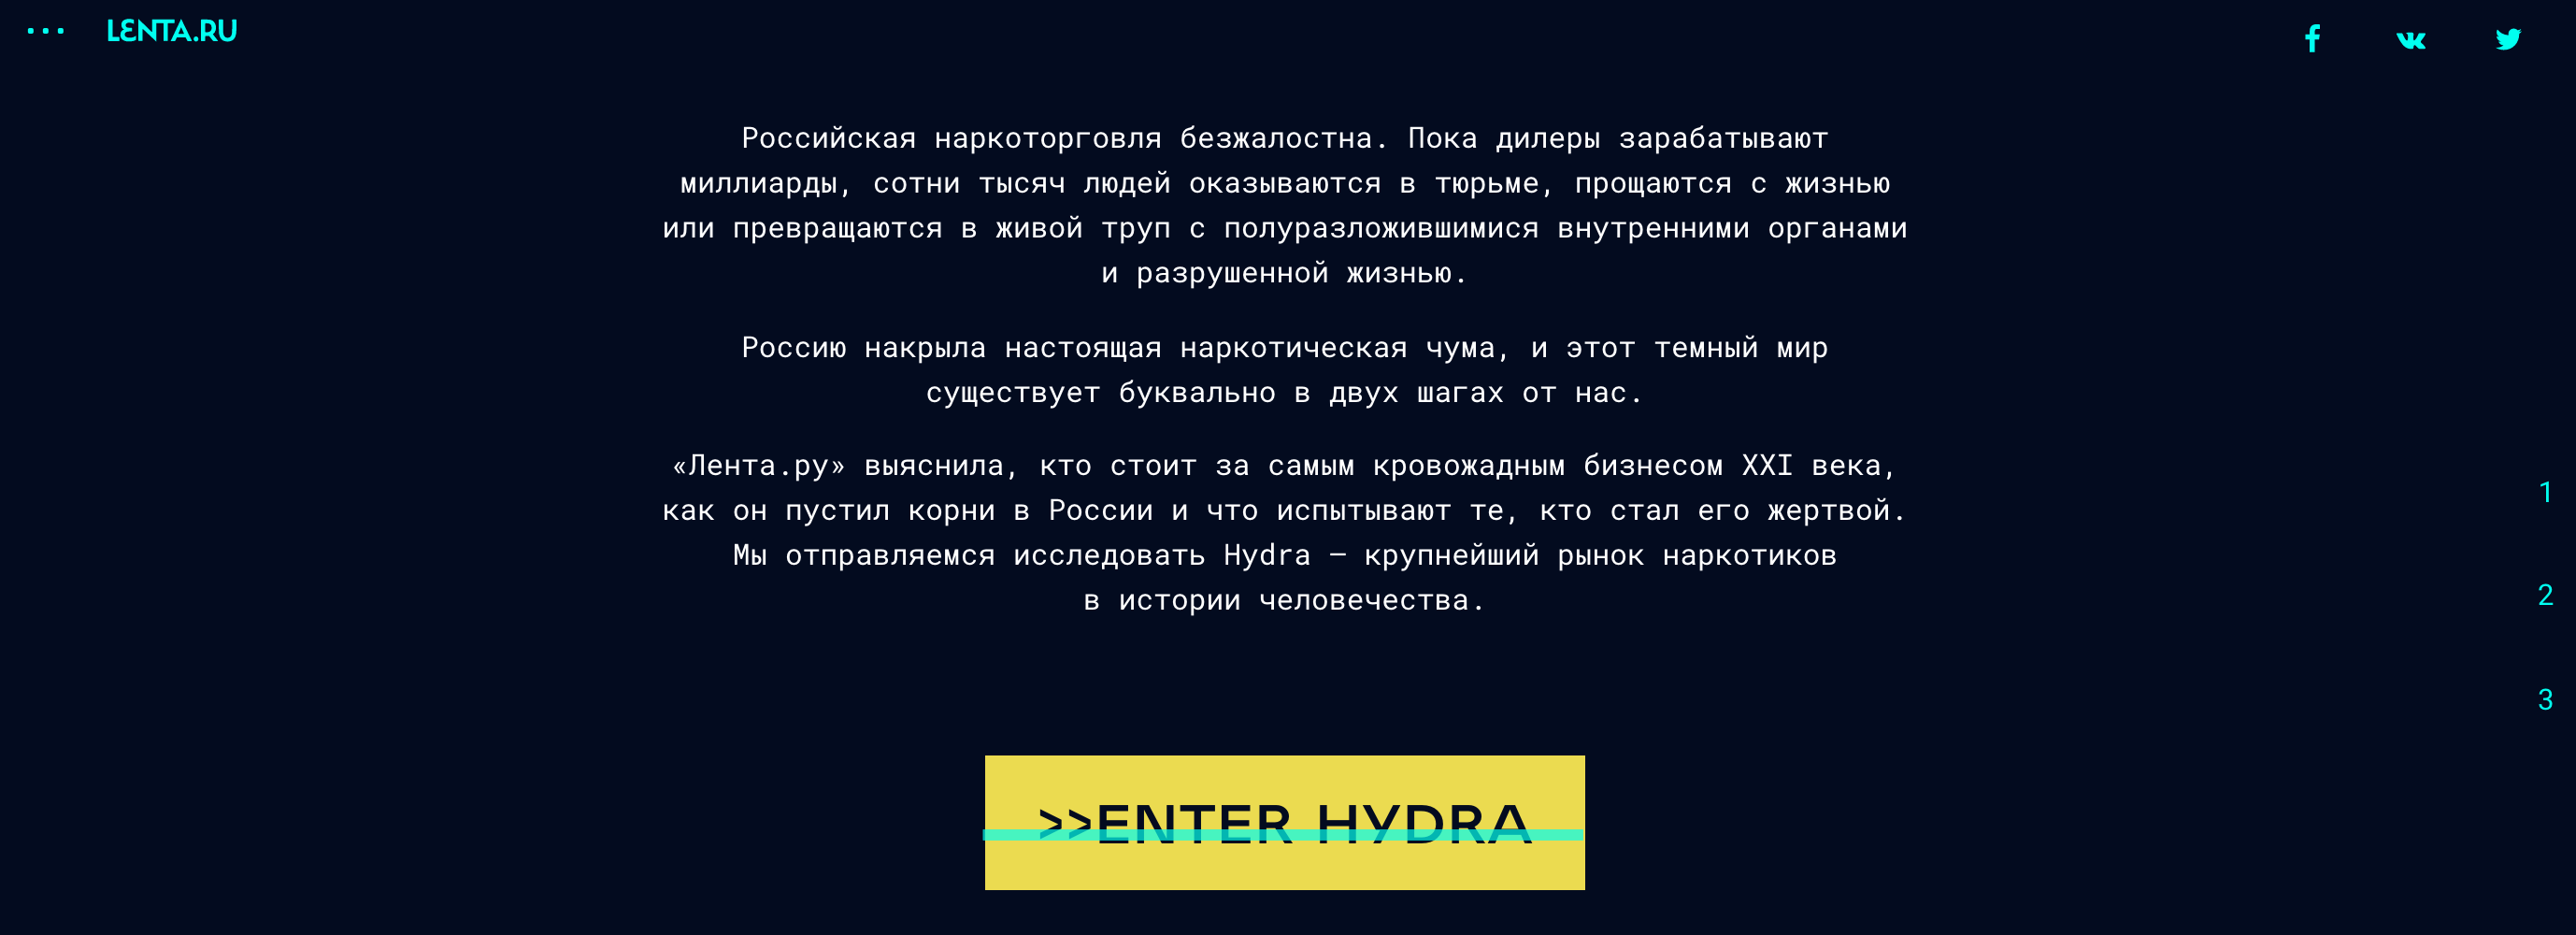 Darknet в россии megaruzxpnew4af даркнет каталог mega